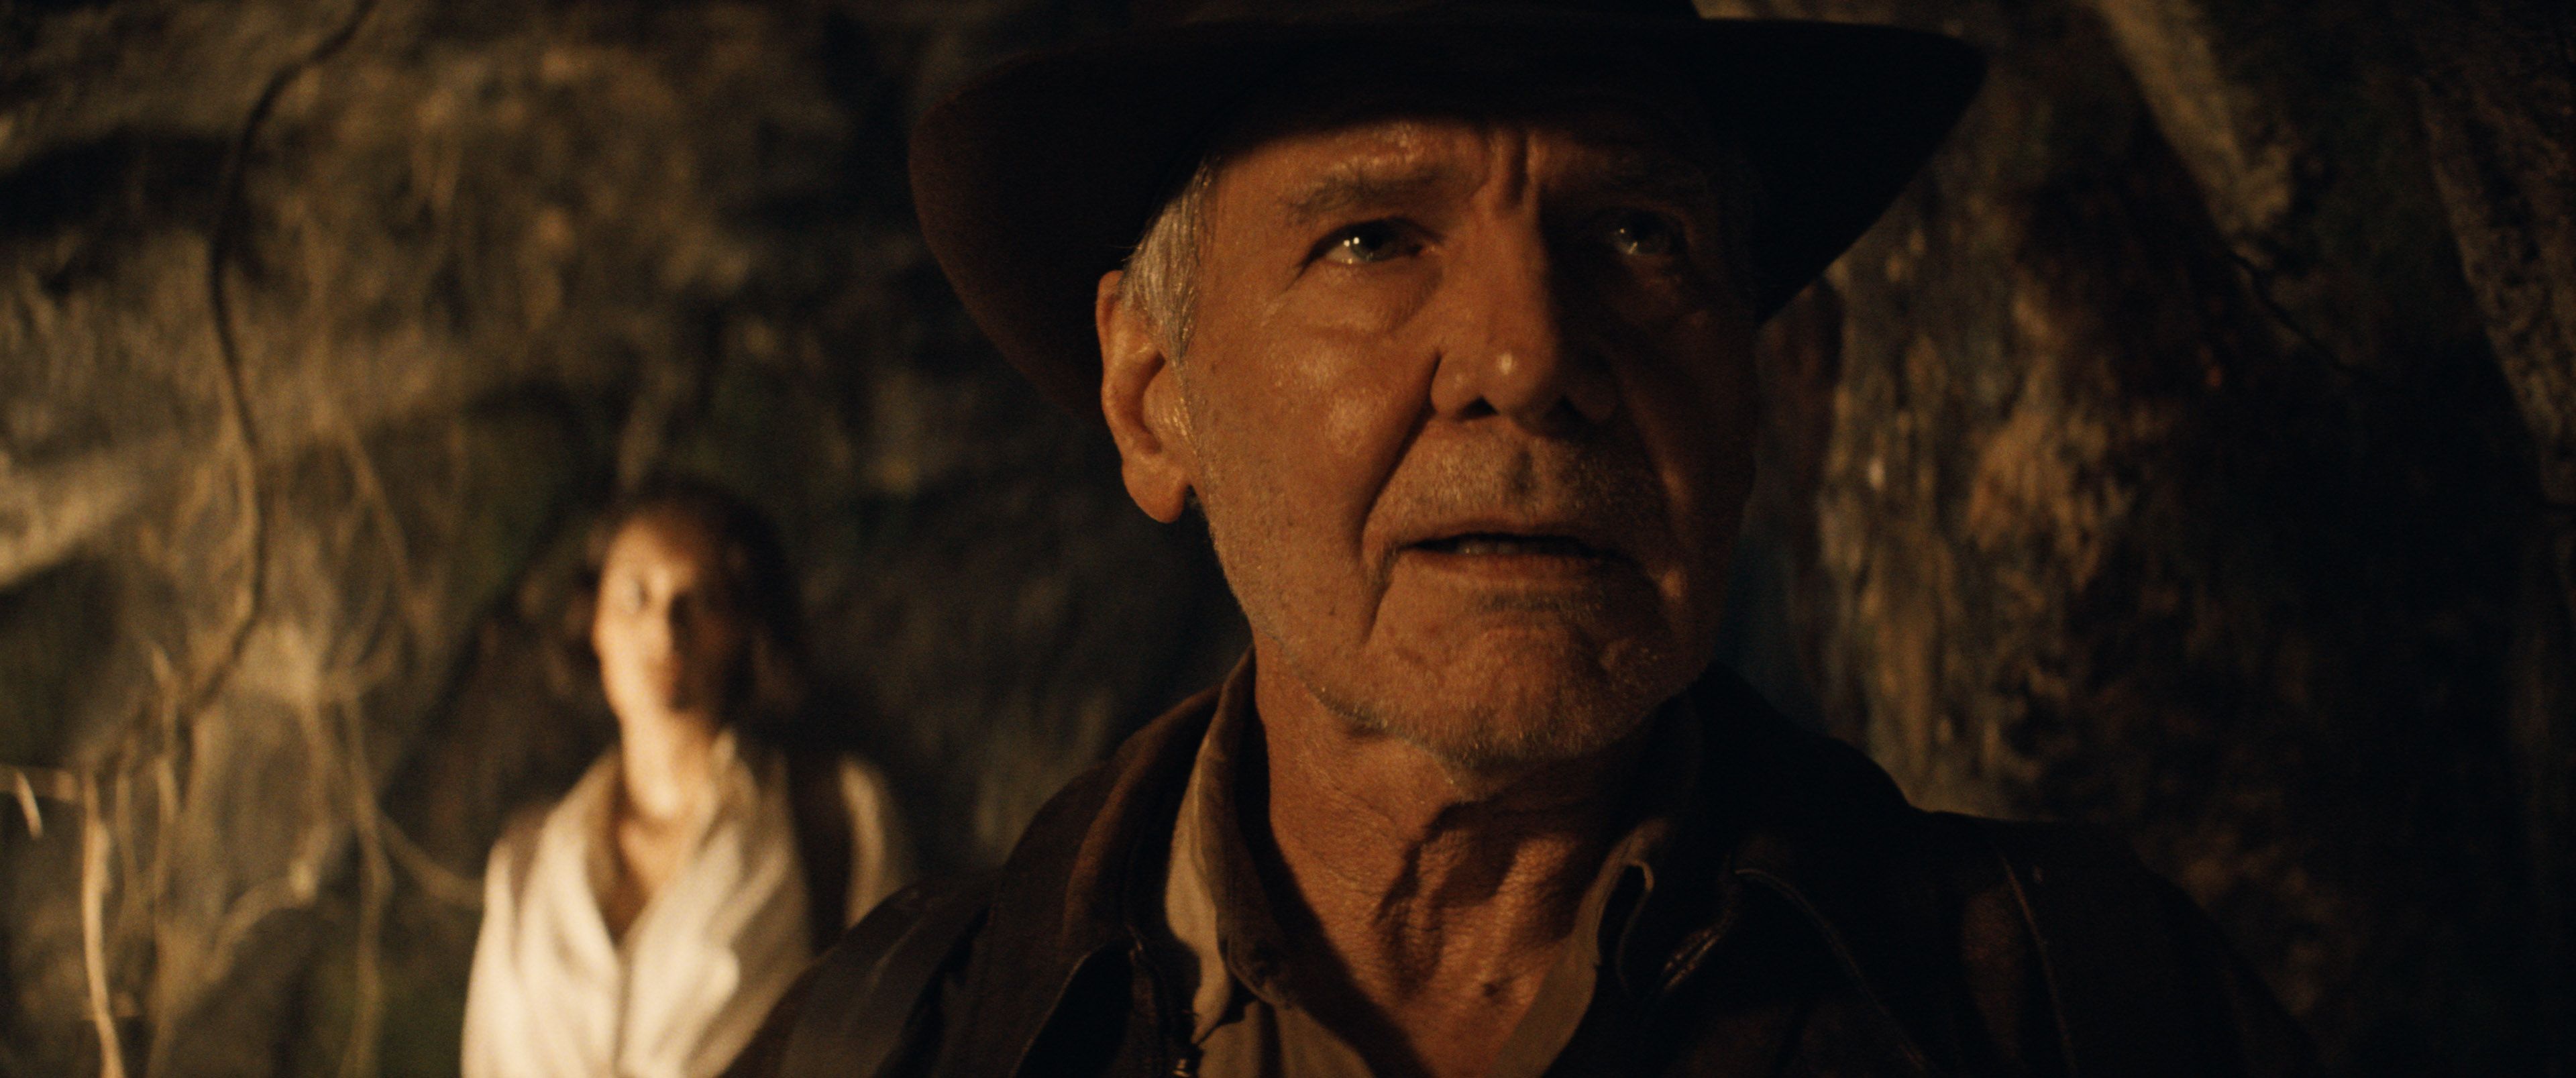 Indiana Jones 5 Movie: Release Date, Cast, New Details - Parade